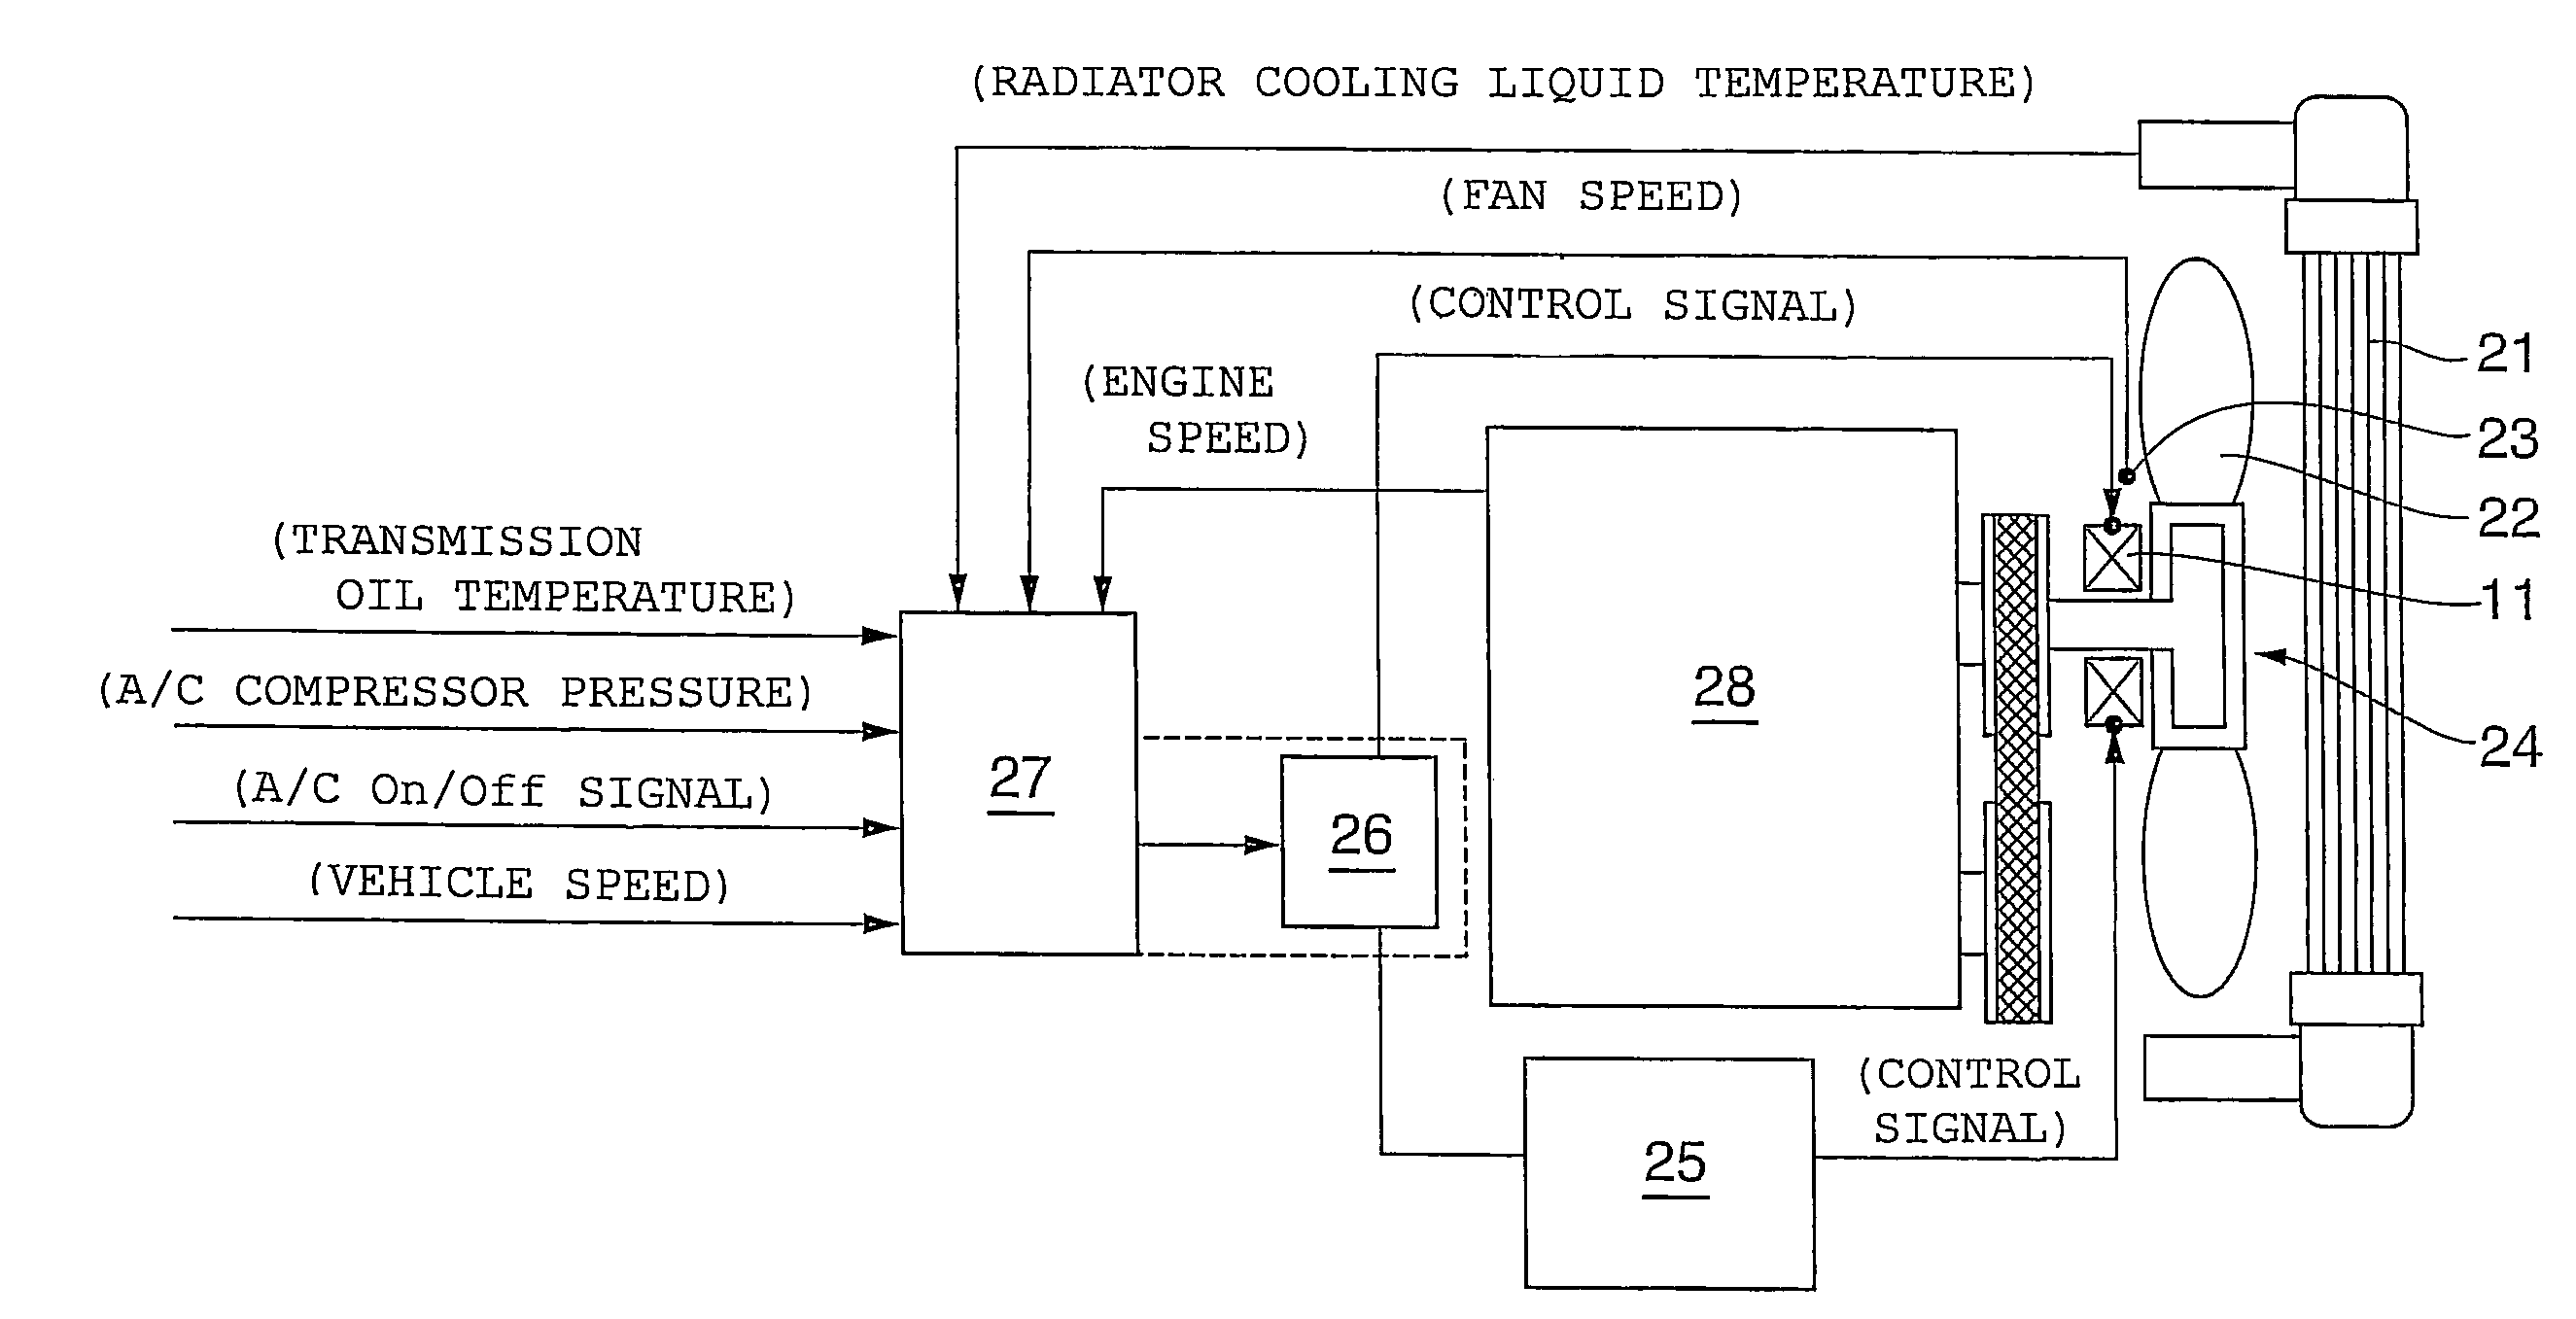 Control method for external control type fan clutch